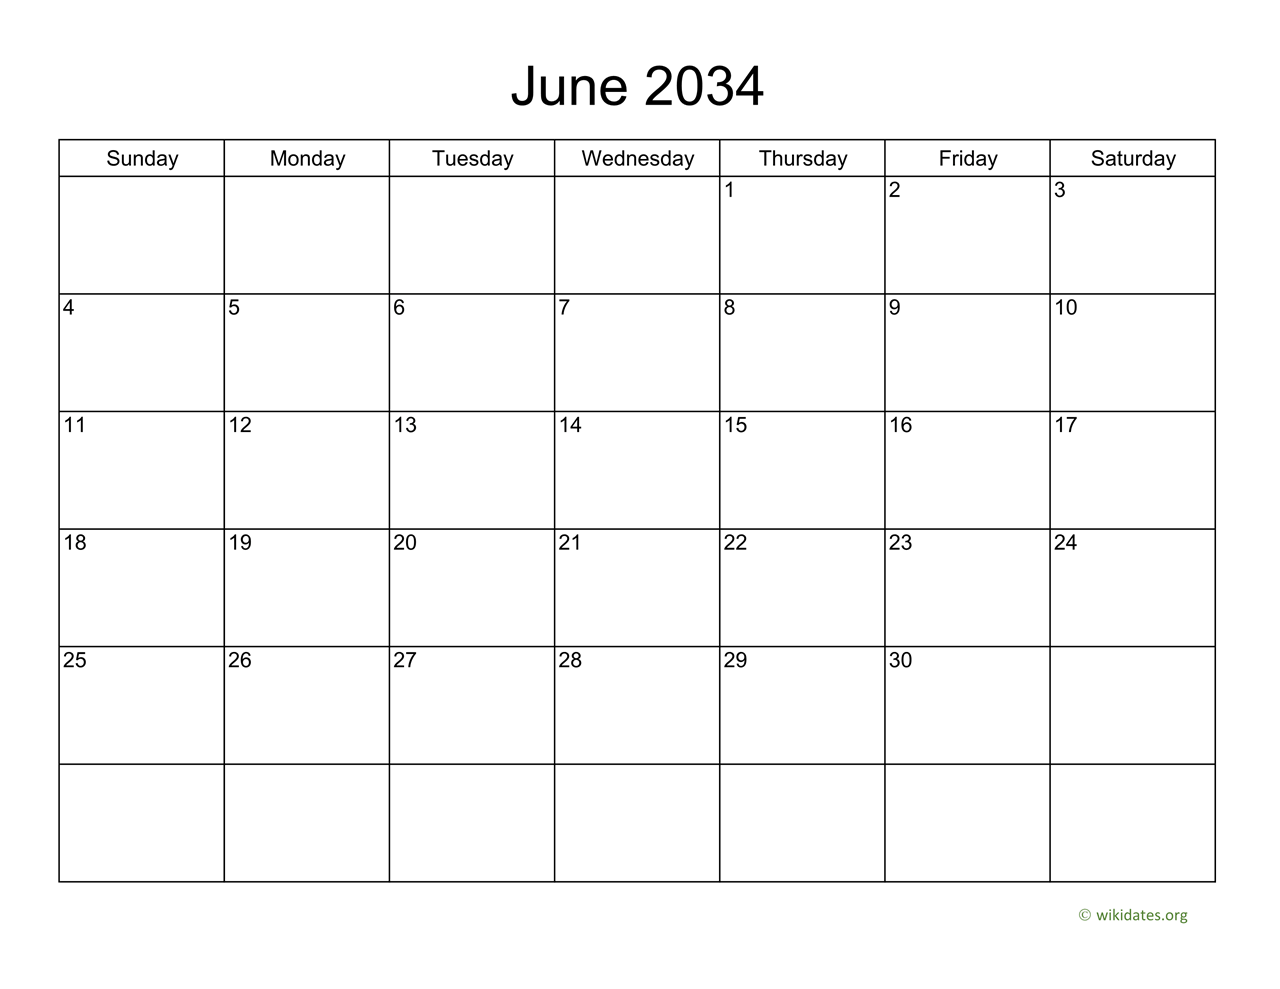 basic-calendar-for-june-2034-wikidates